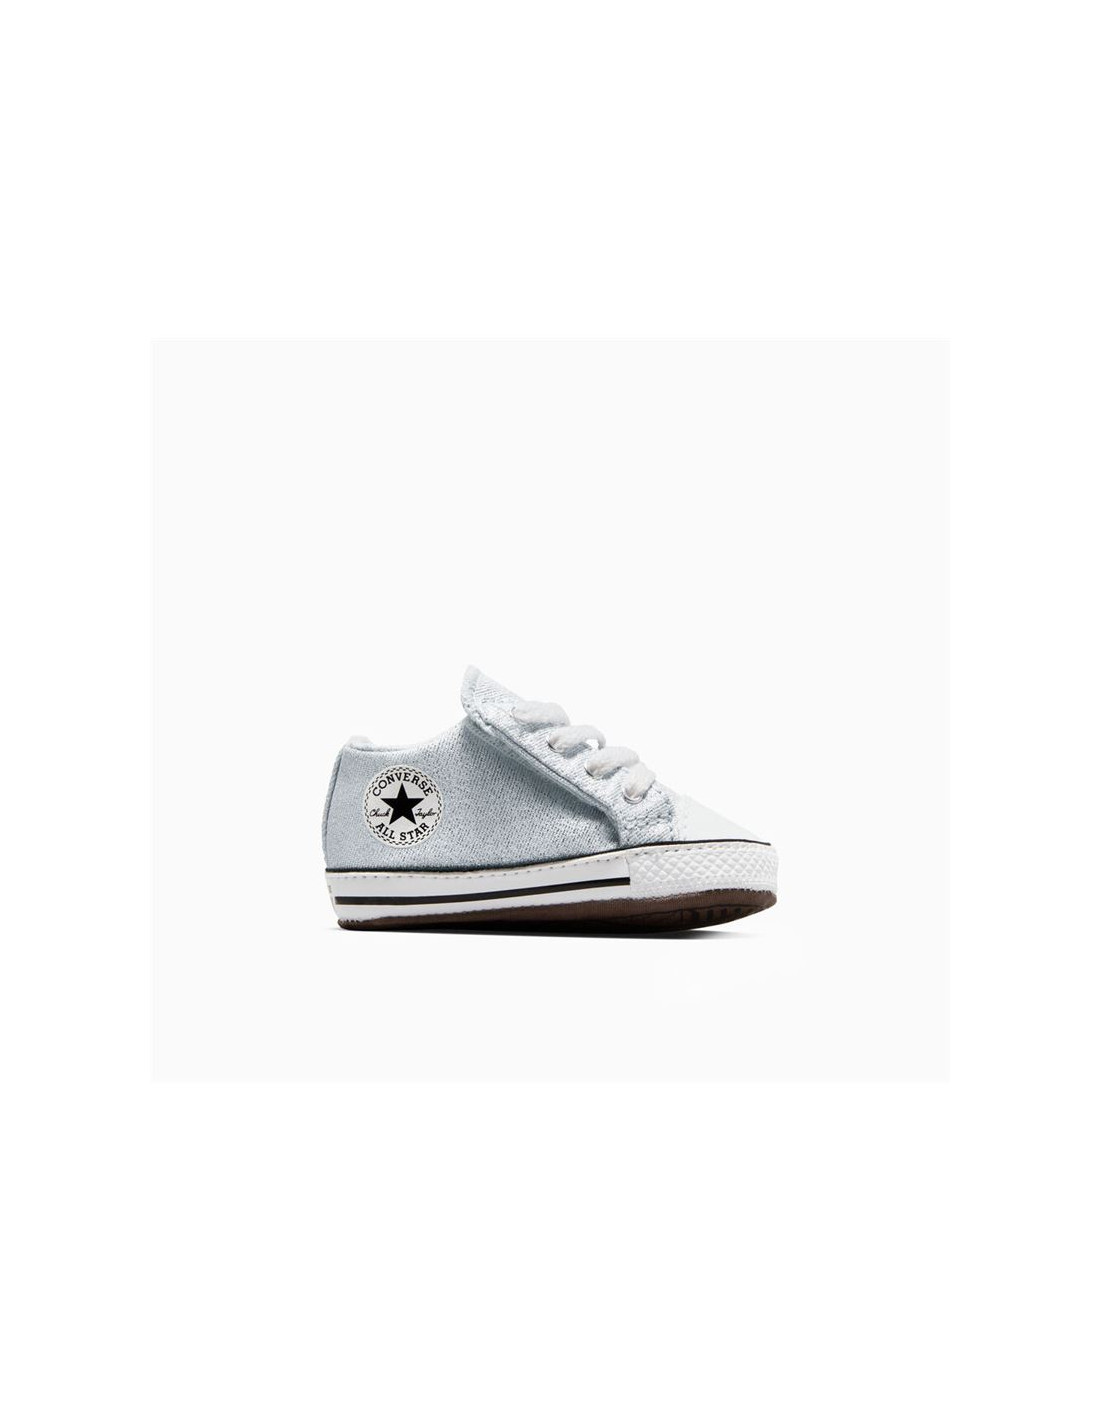 https://media.atmosferasport.es/326824-thickbox_default/chaussures-converse-chuck-taylor-all-star-cribster-gris-blanc-bebe.jpg